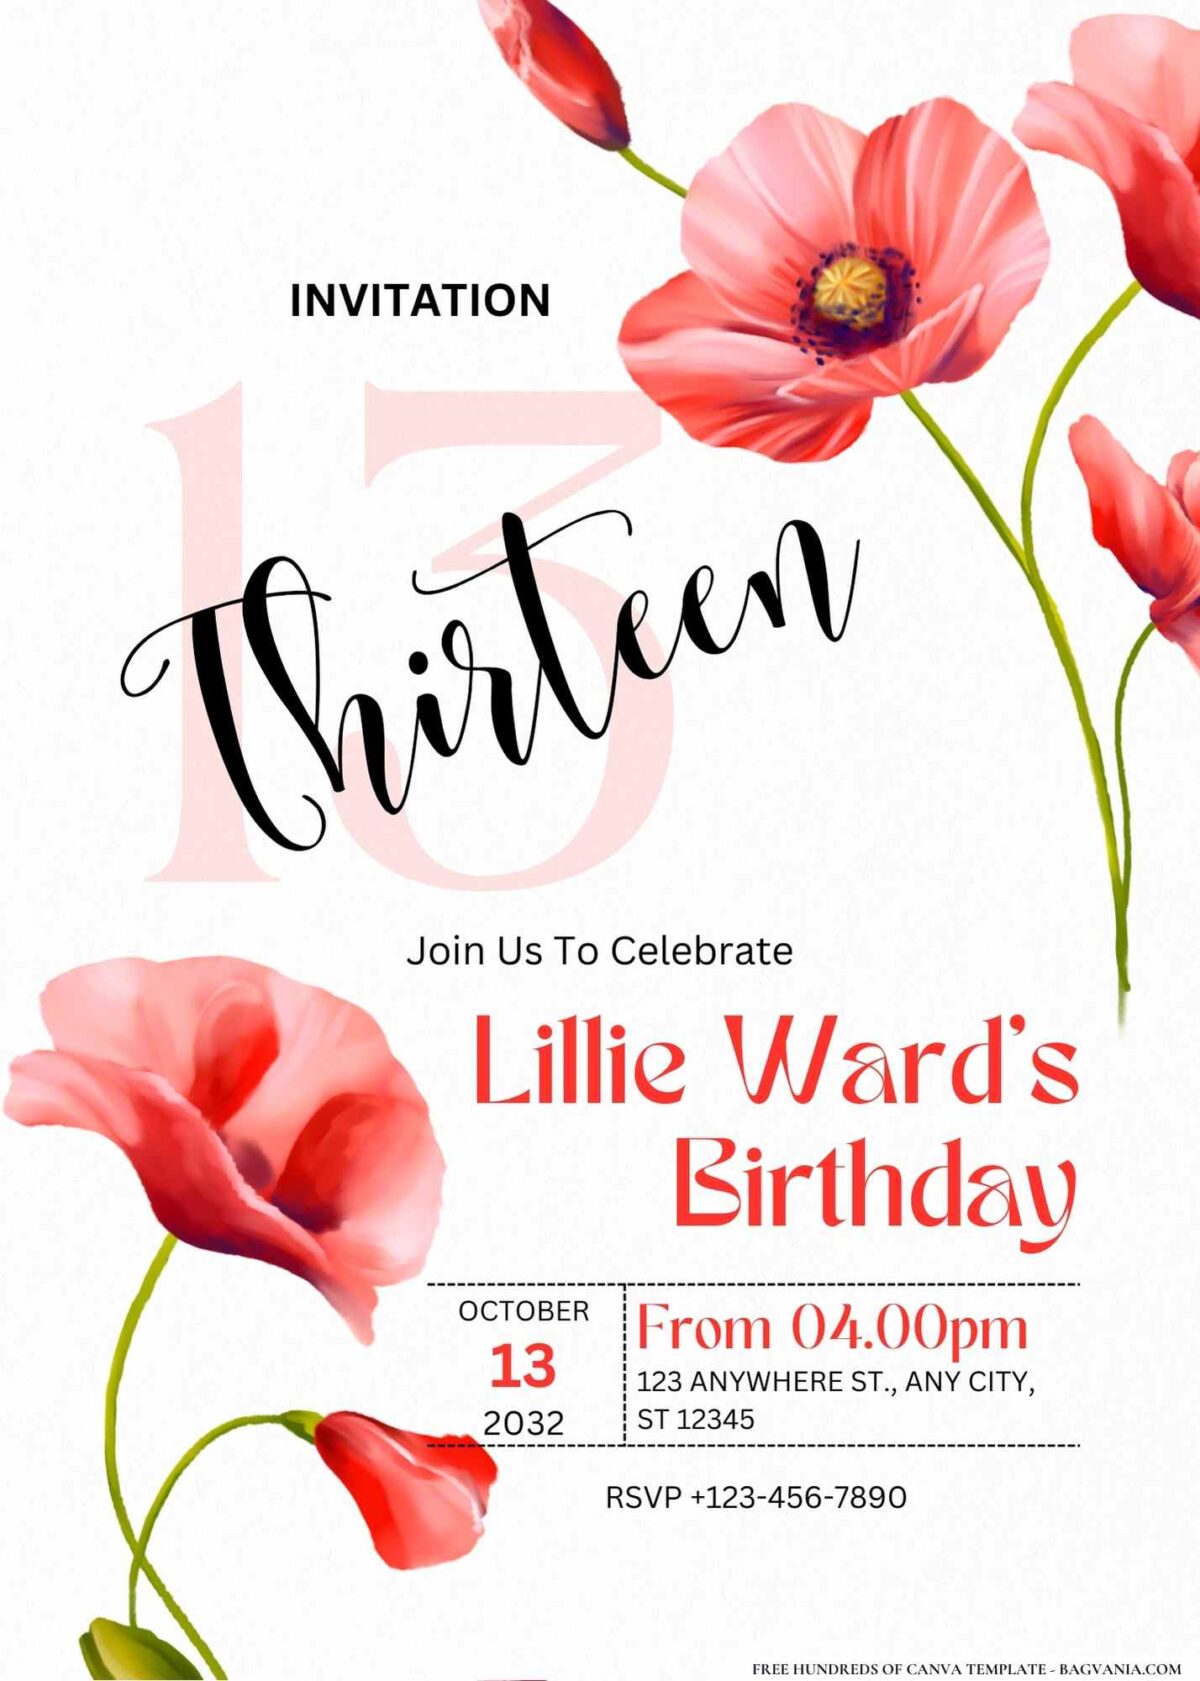 FREE Editable Watercolor Red Orange Poppies Birthday Invitation